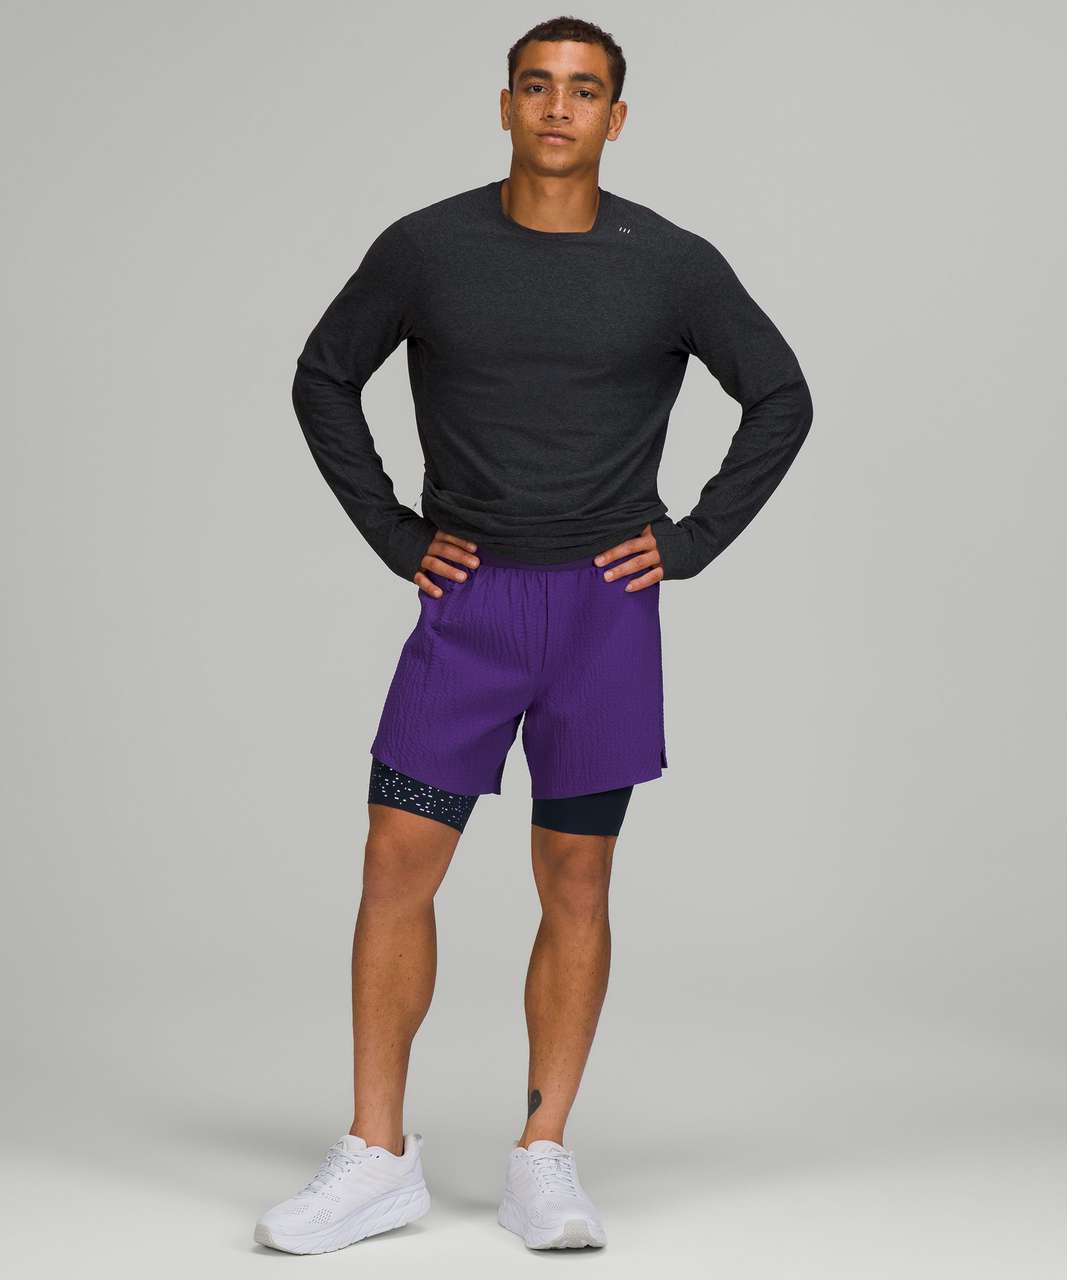 Active OOTD: My Favorite Shorts, Men's 4” Surge Shorts, details inside : r/ lululemon